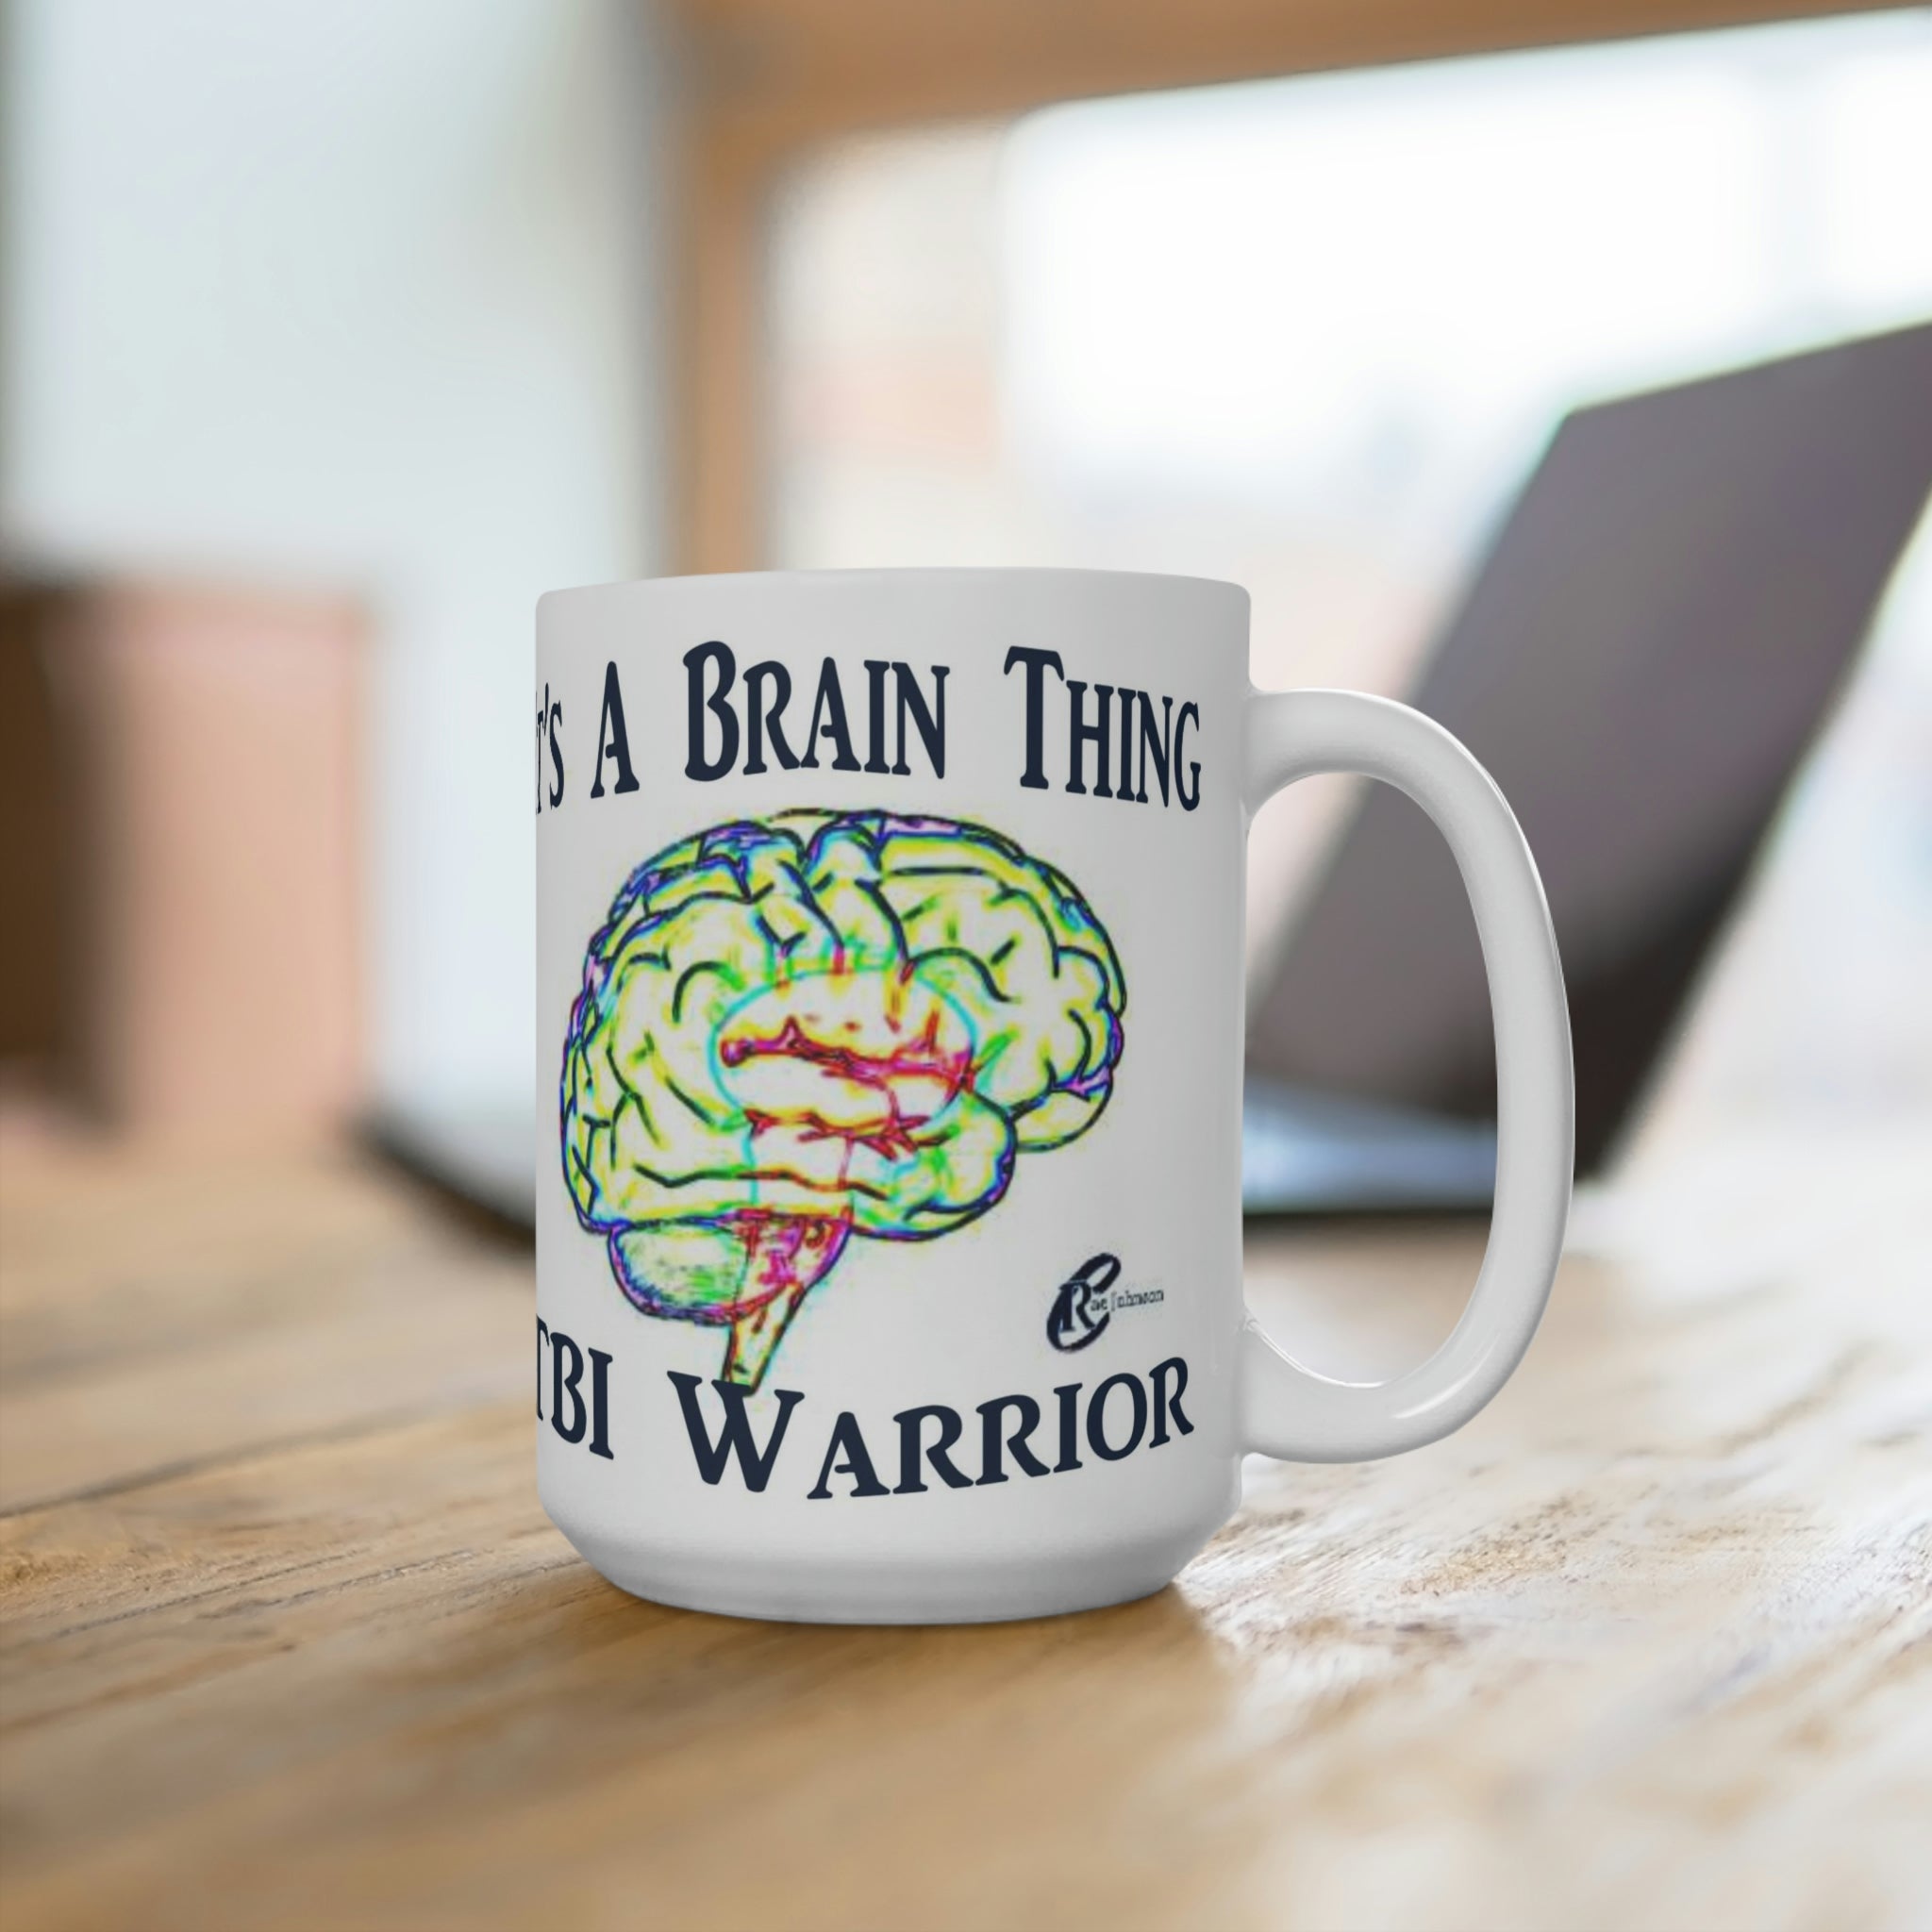 TBI Warrior Brain Bling White Mug 15oz